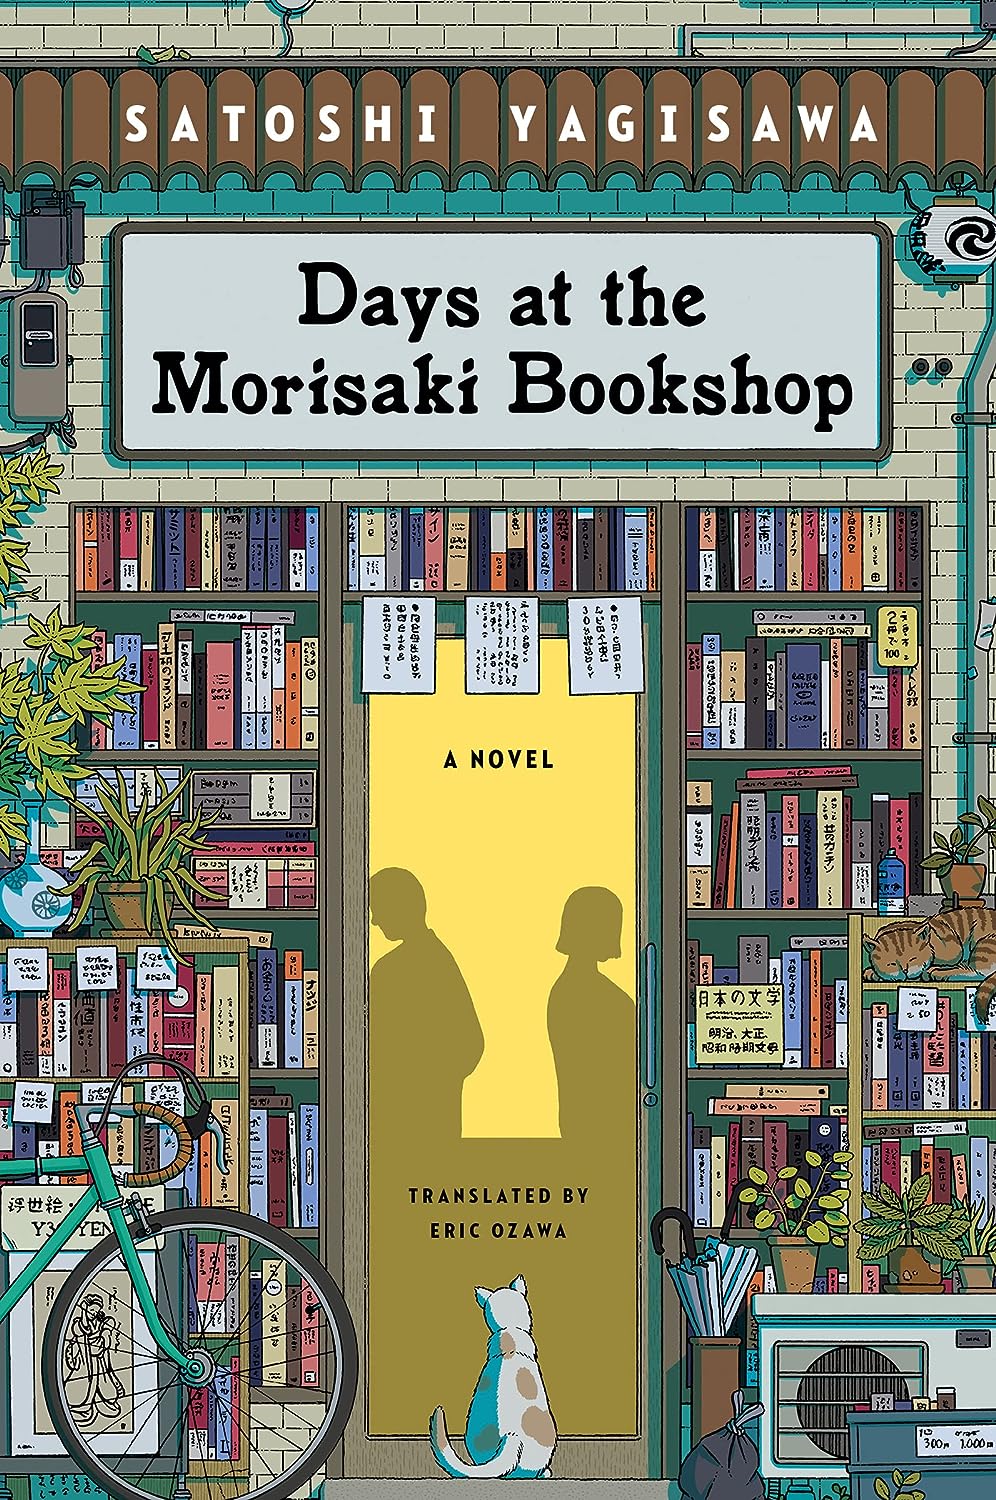 Days at the Morisaki Bookshop | Satoshi Yagisawa